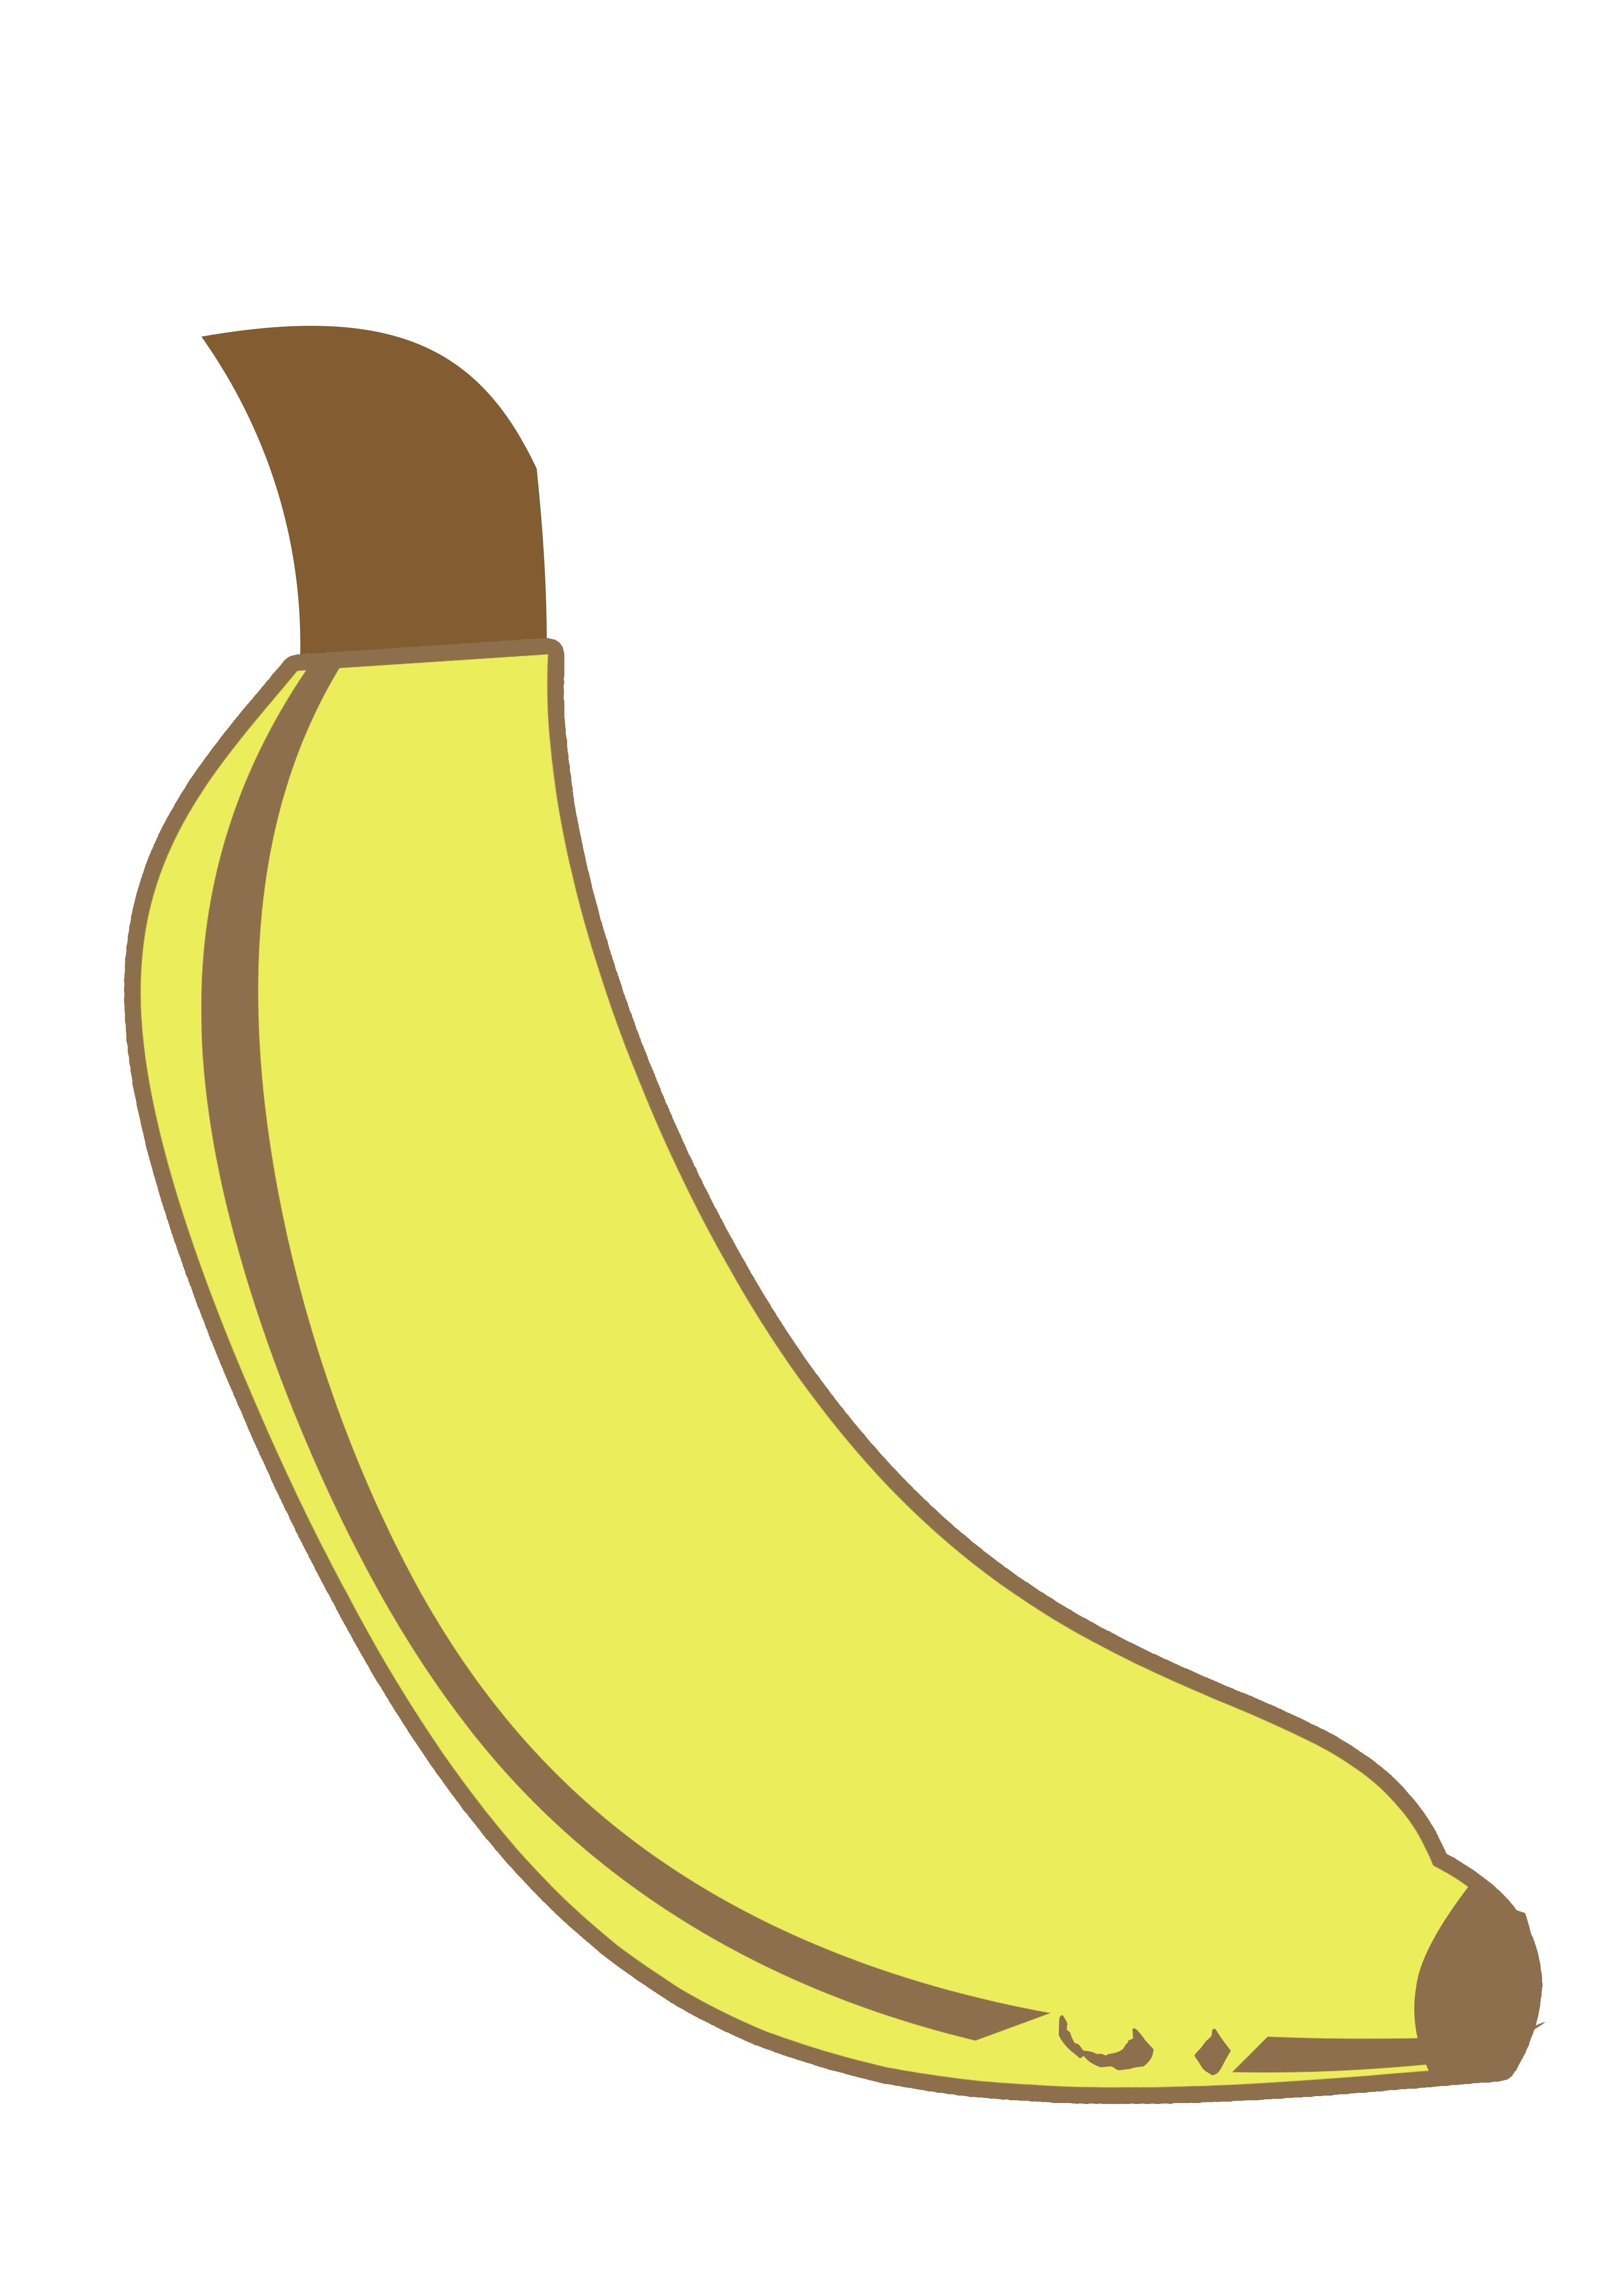 item in the game, banana